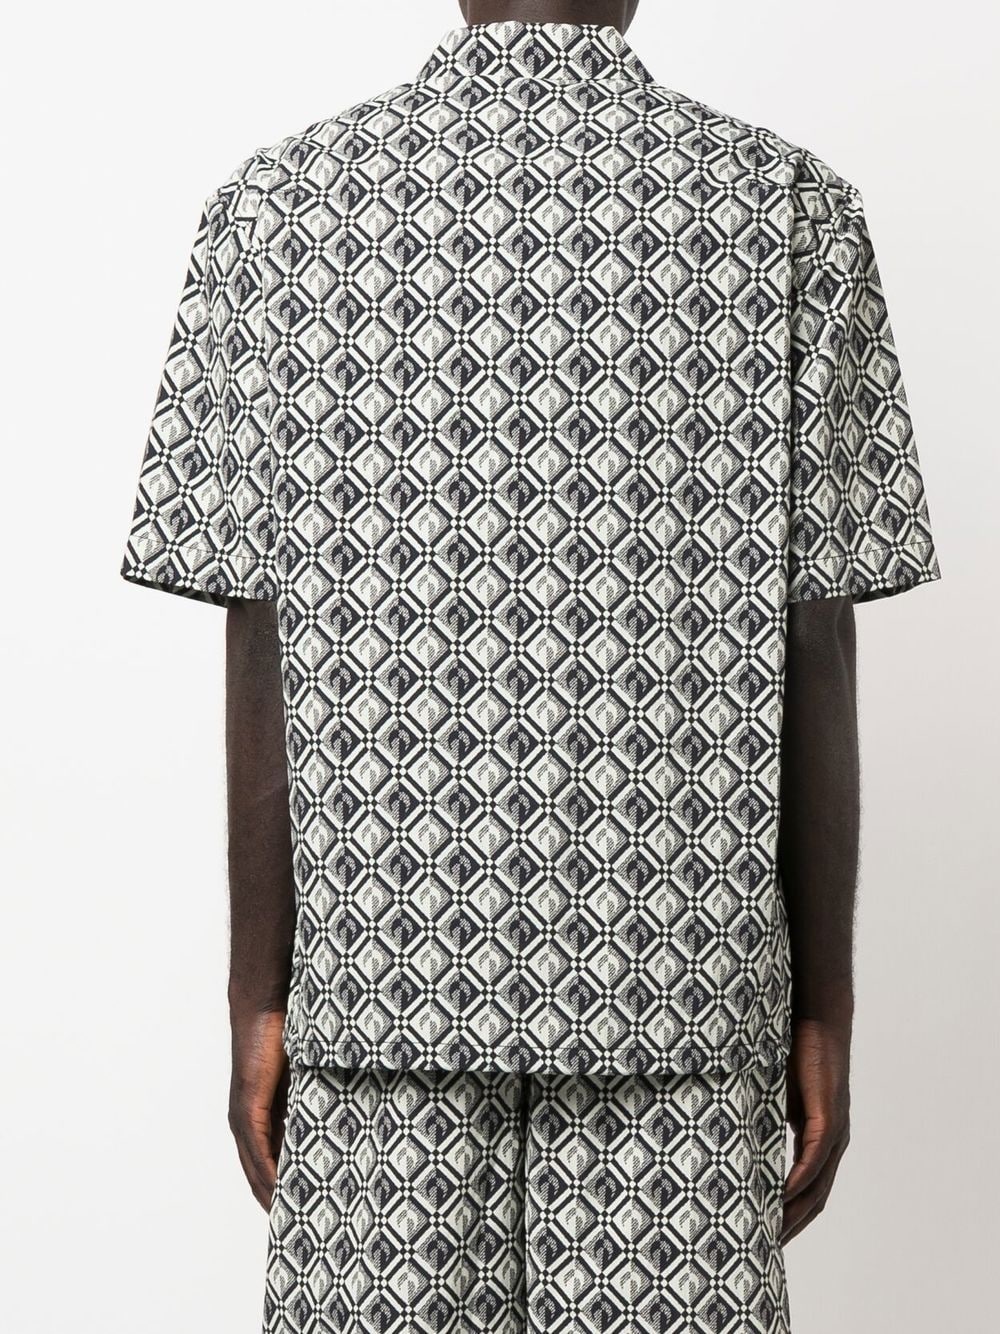 Zephyr diamond-pattern moon shirt - 4